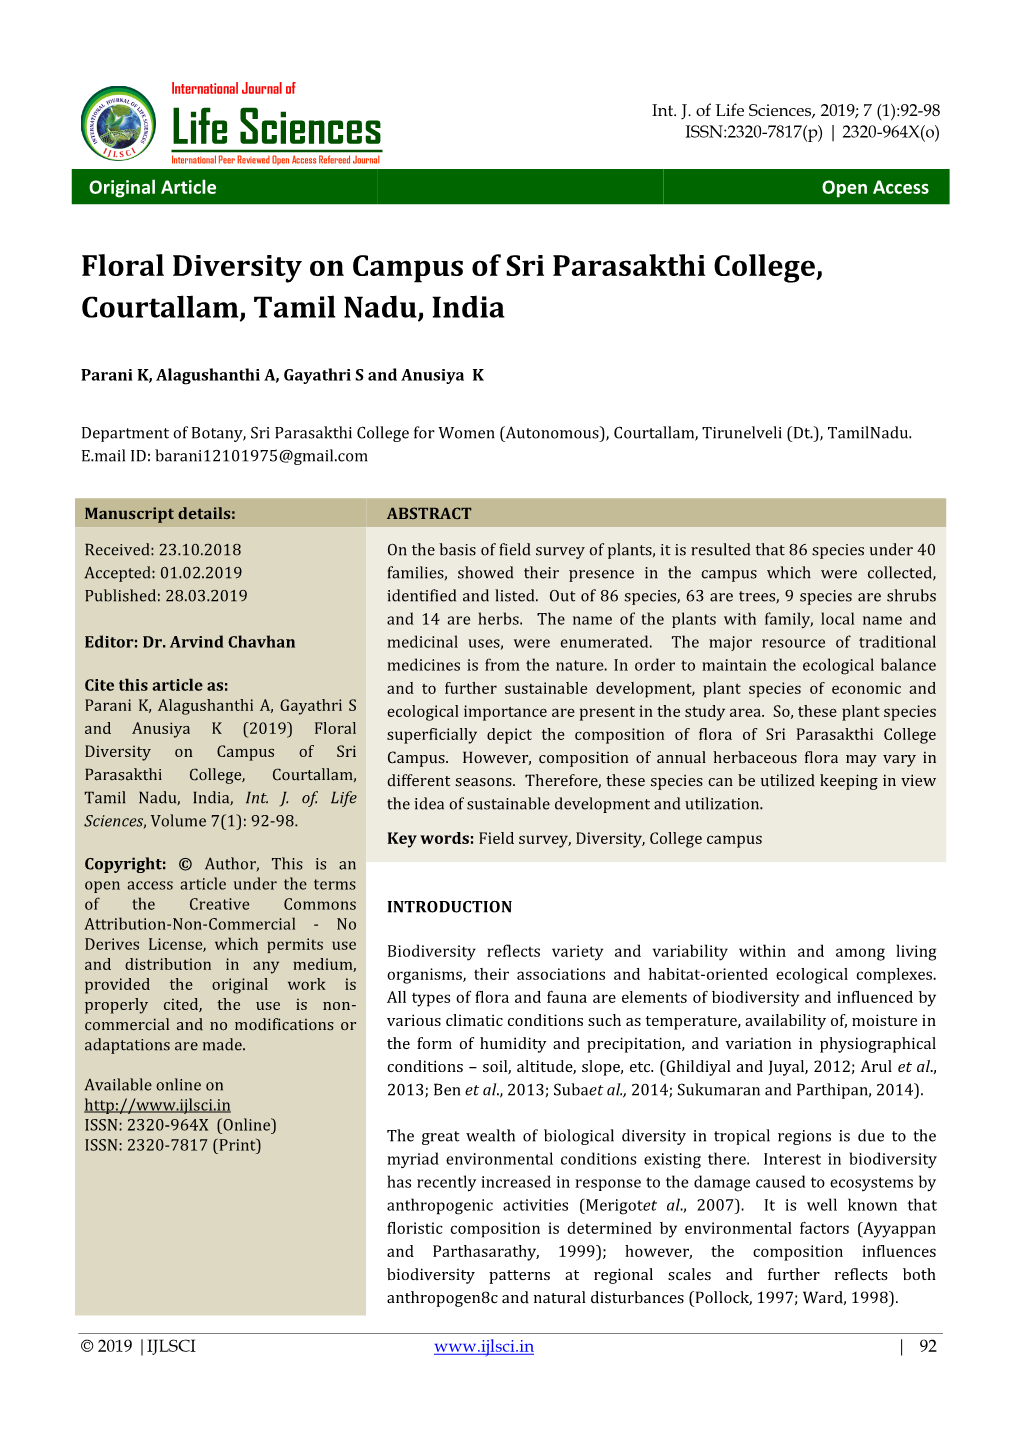 Floral Diversity on Campus of Sri Parasakthi College, Courtallam, Tamil Nadu, India